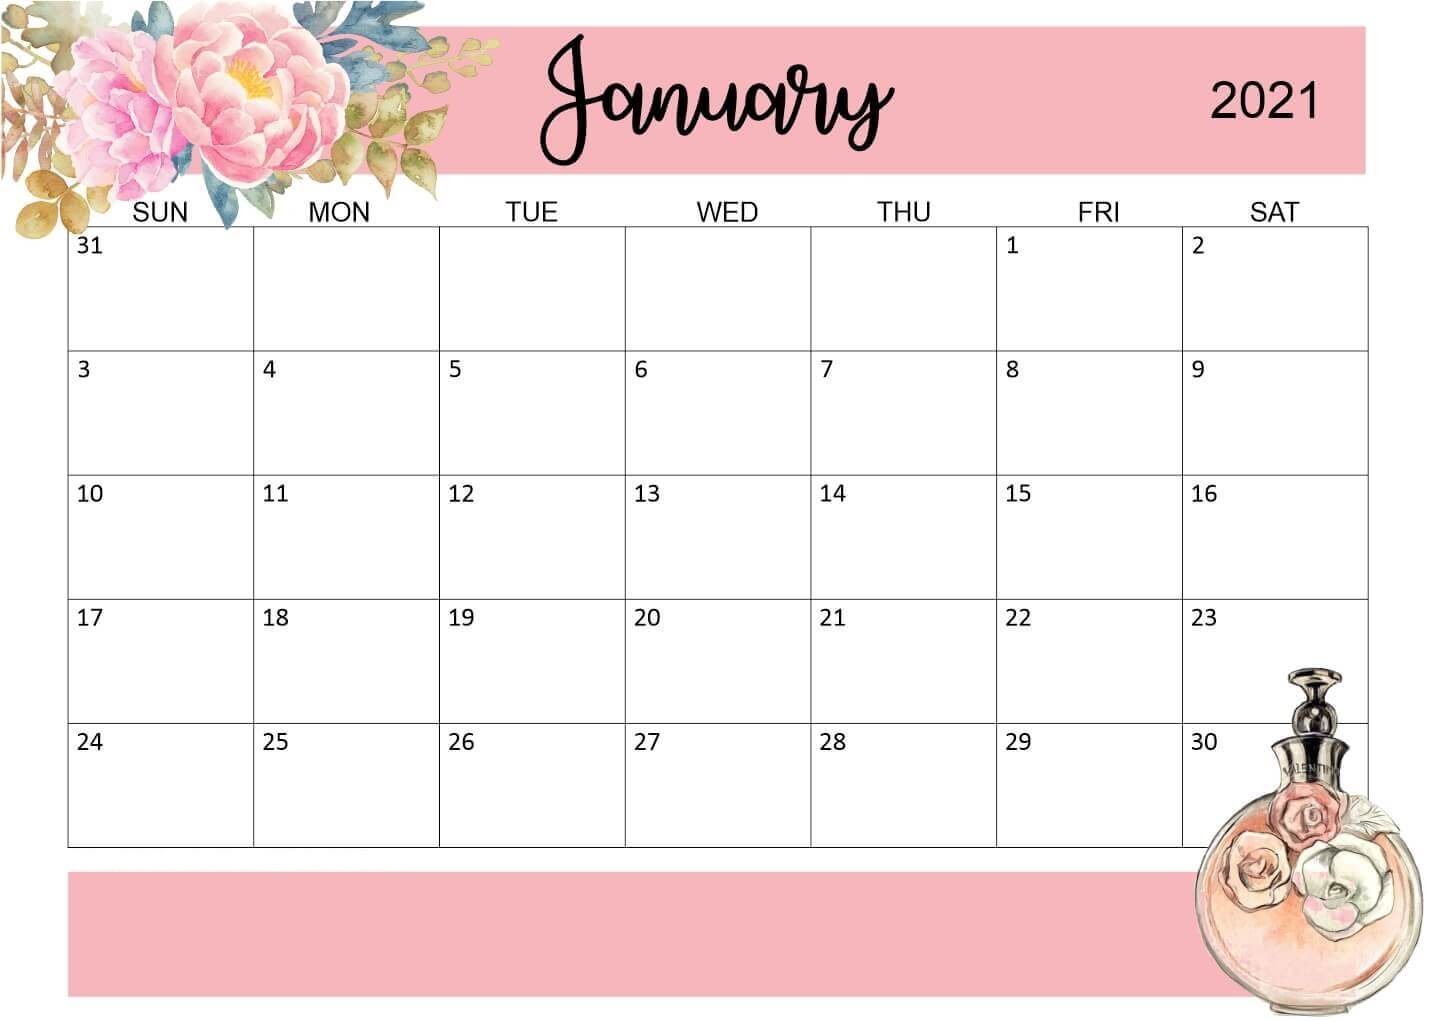 January 2021 Office Desk Calendar